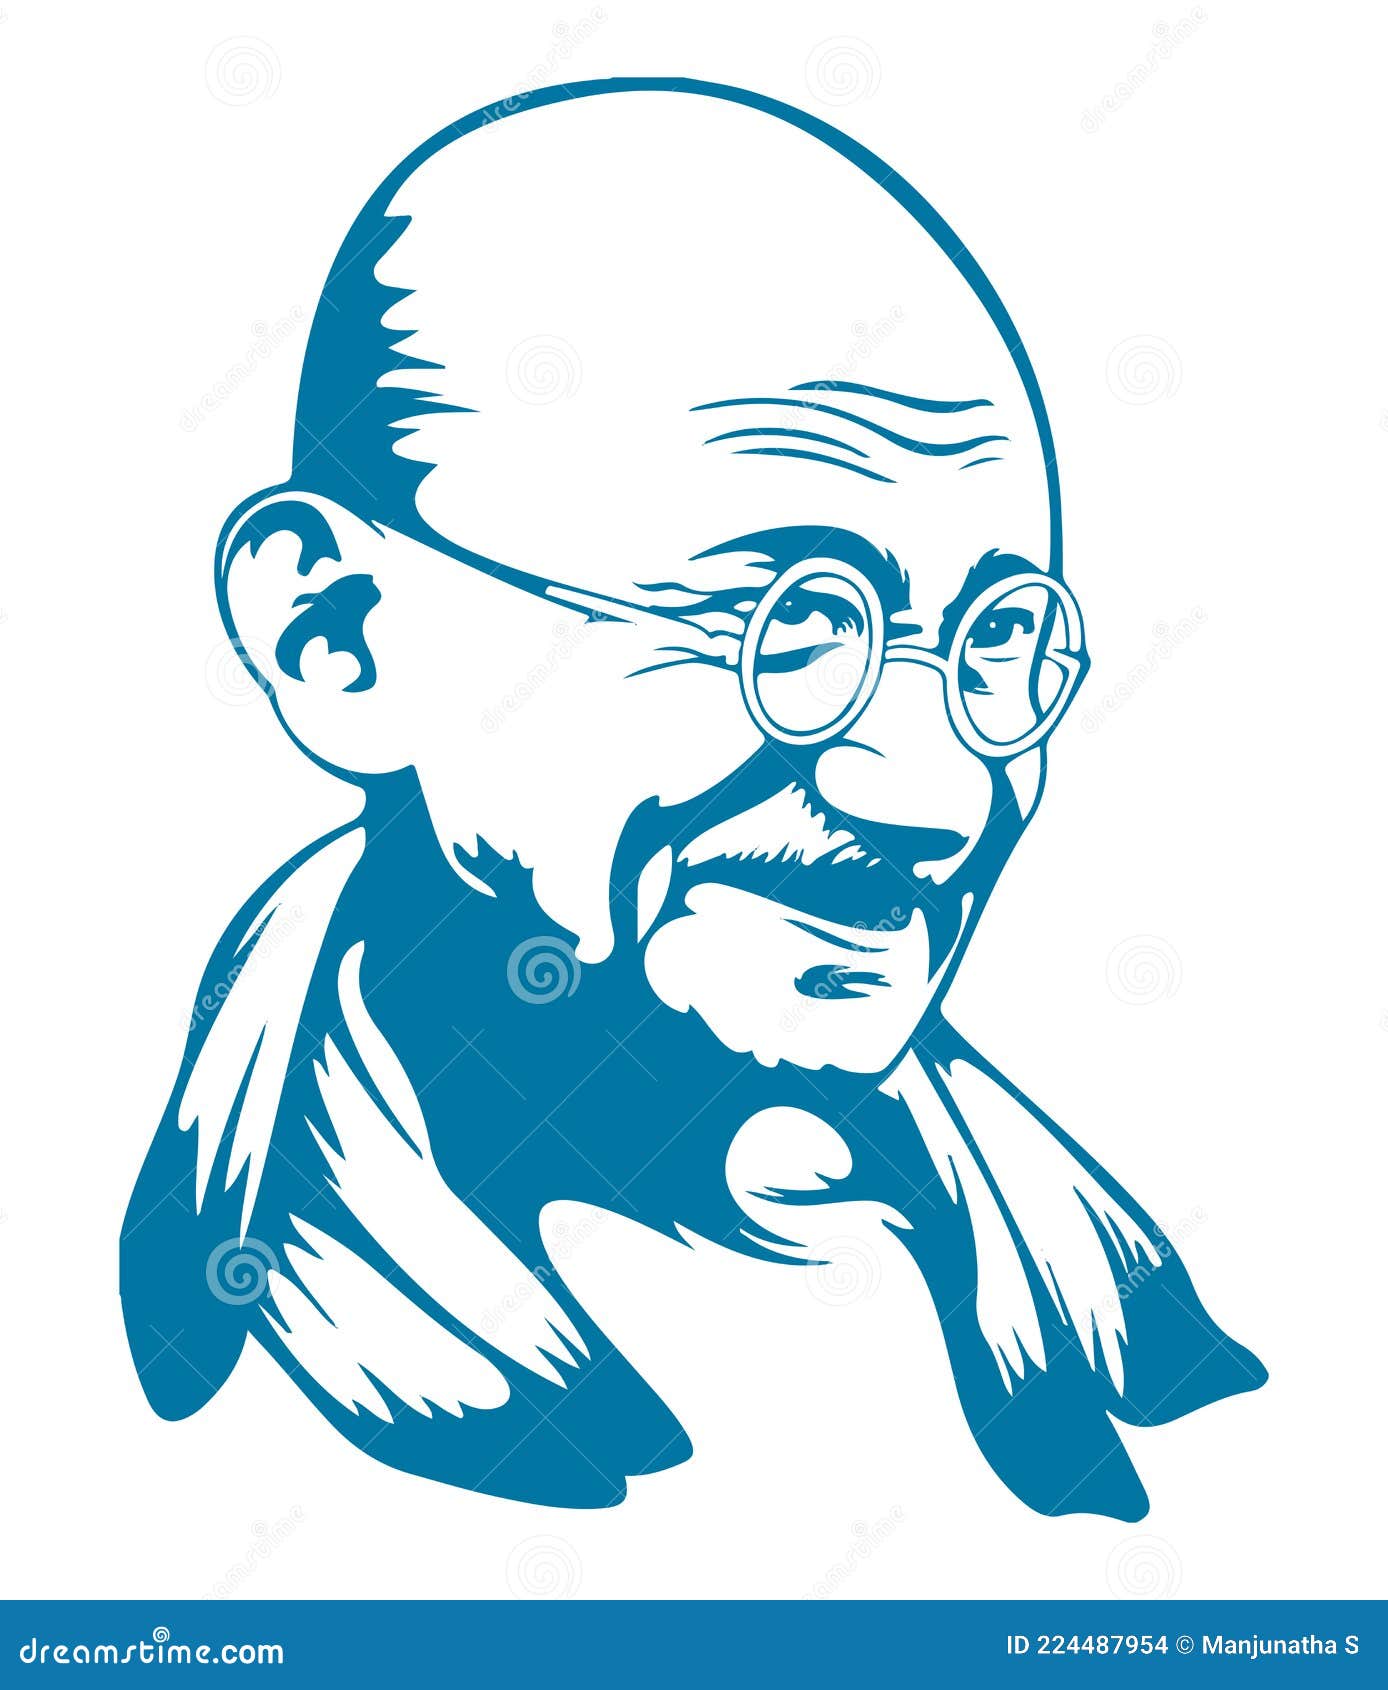 How to draw Mahatma Gandhi step by step  Art wala adda  video Dailymotion